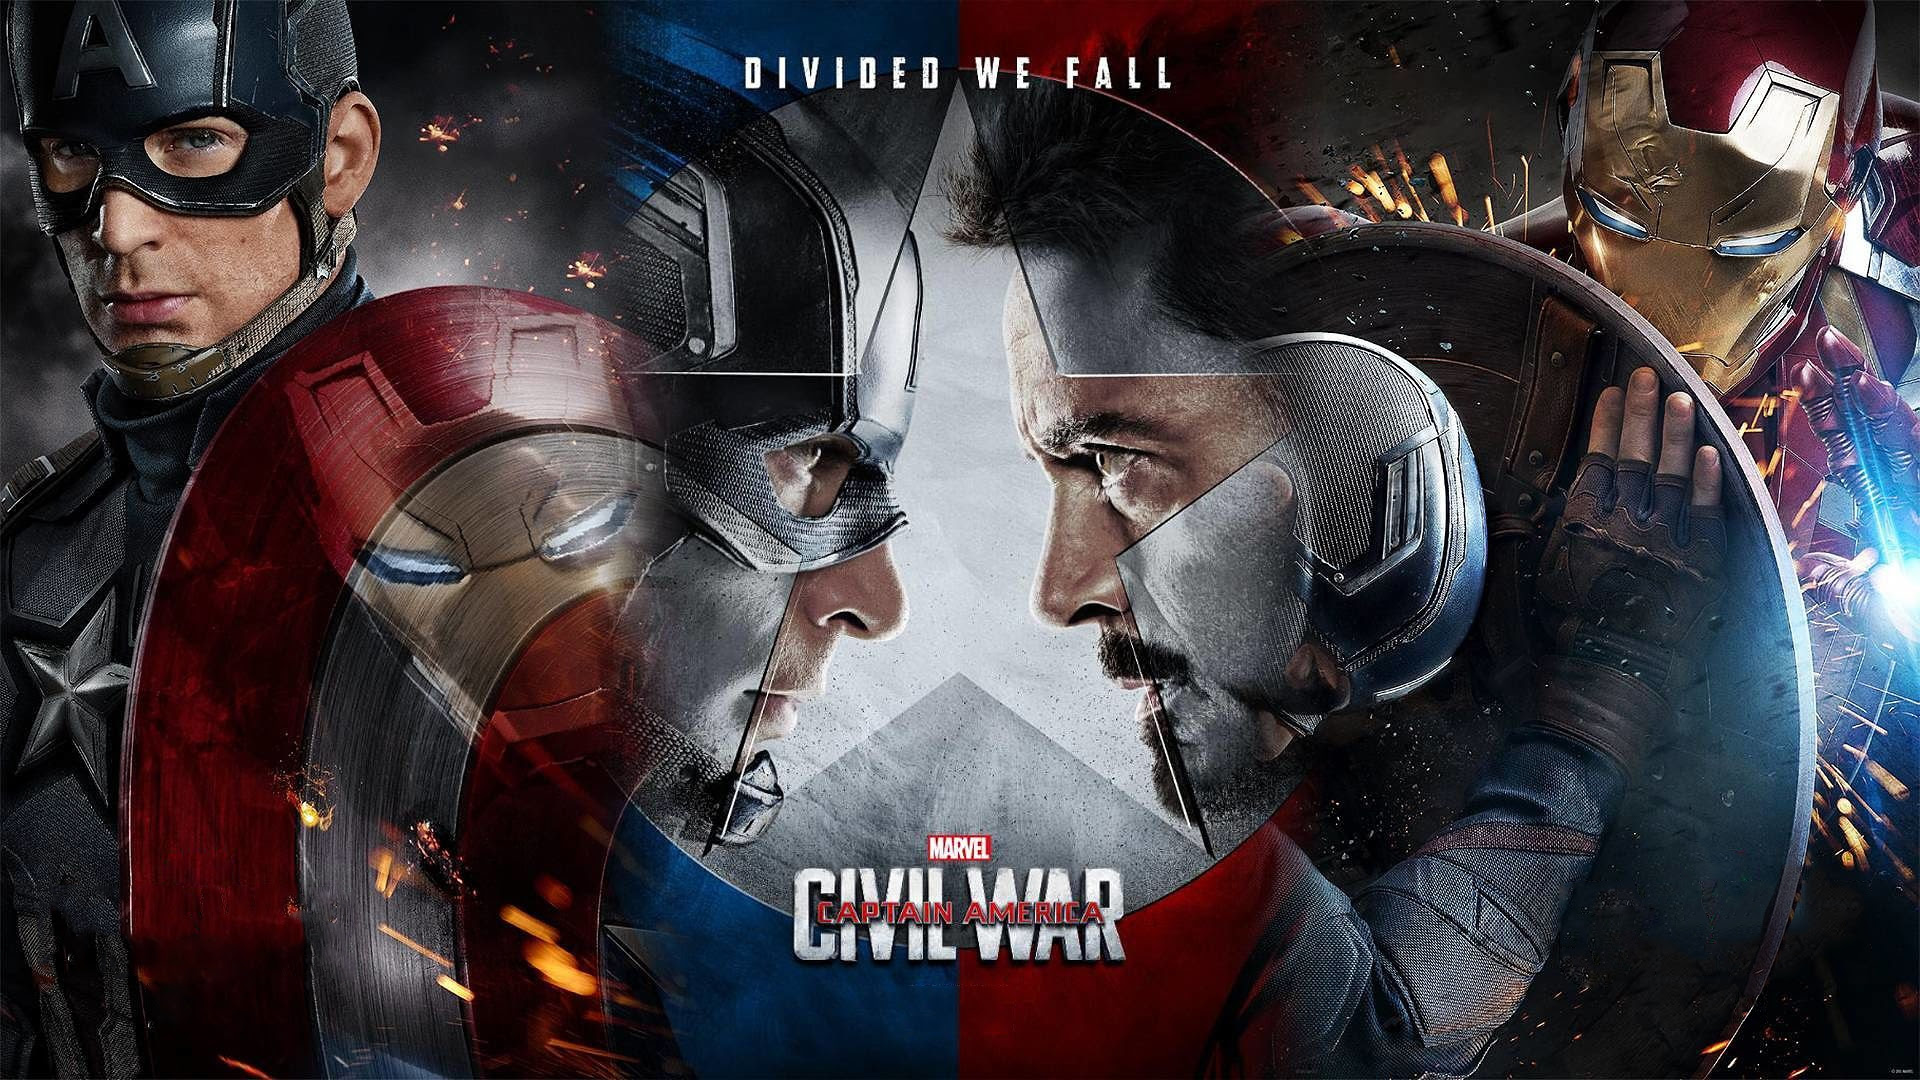 1920x1080] Captain America Civil War Movie Poster ( i.imgur.com )